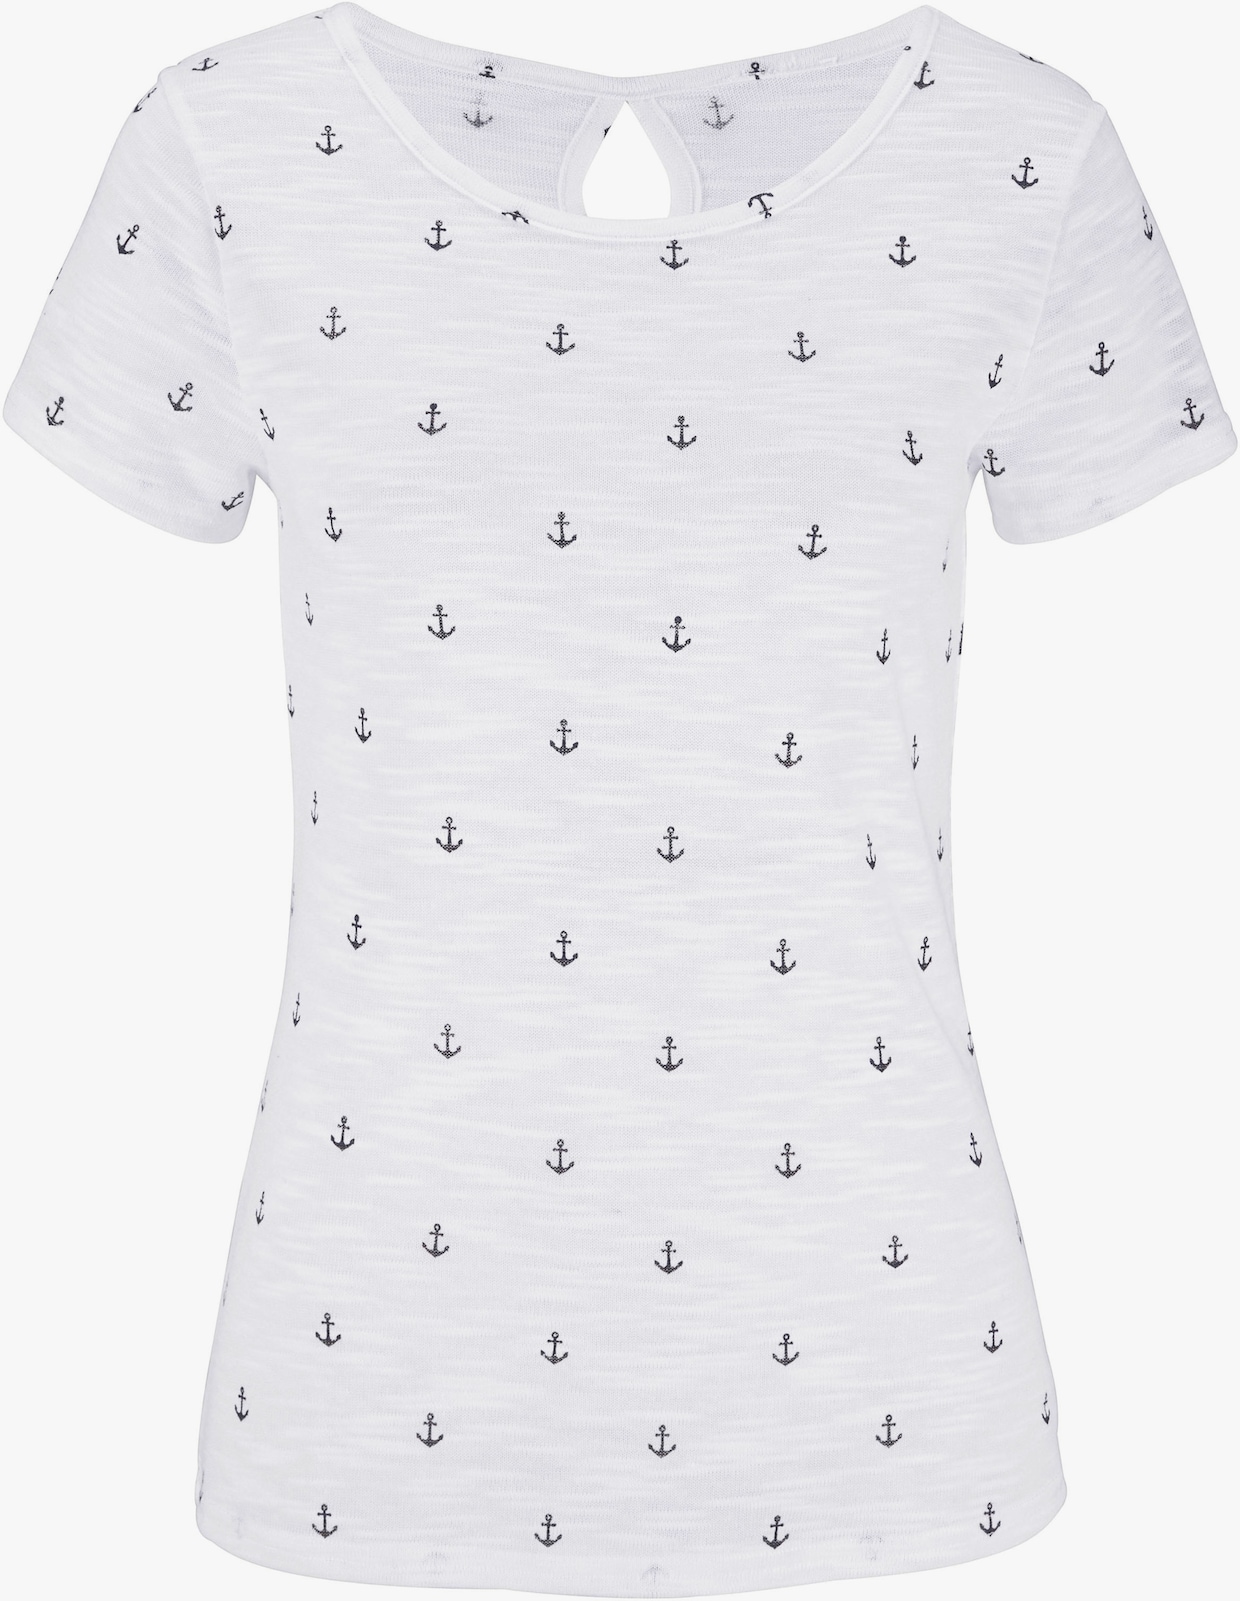 Beachtime T-shirt - marine, wit